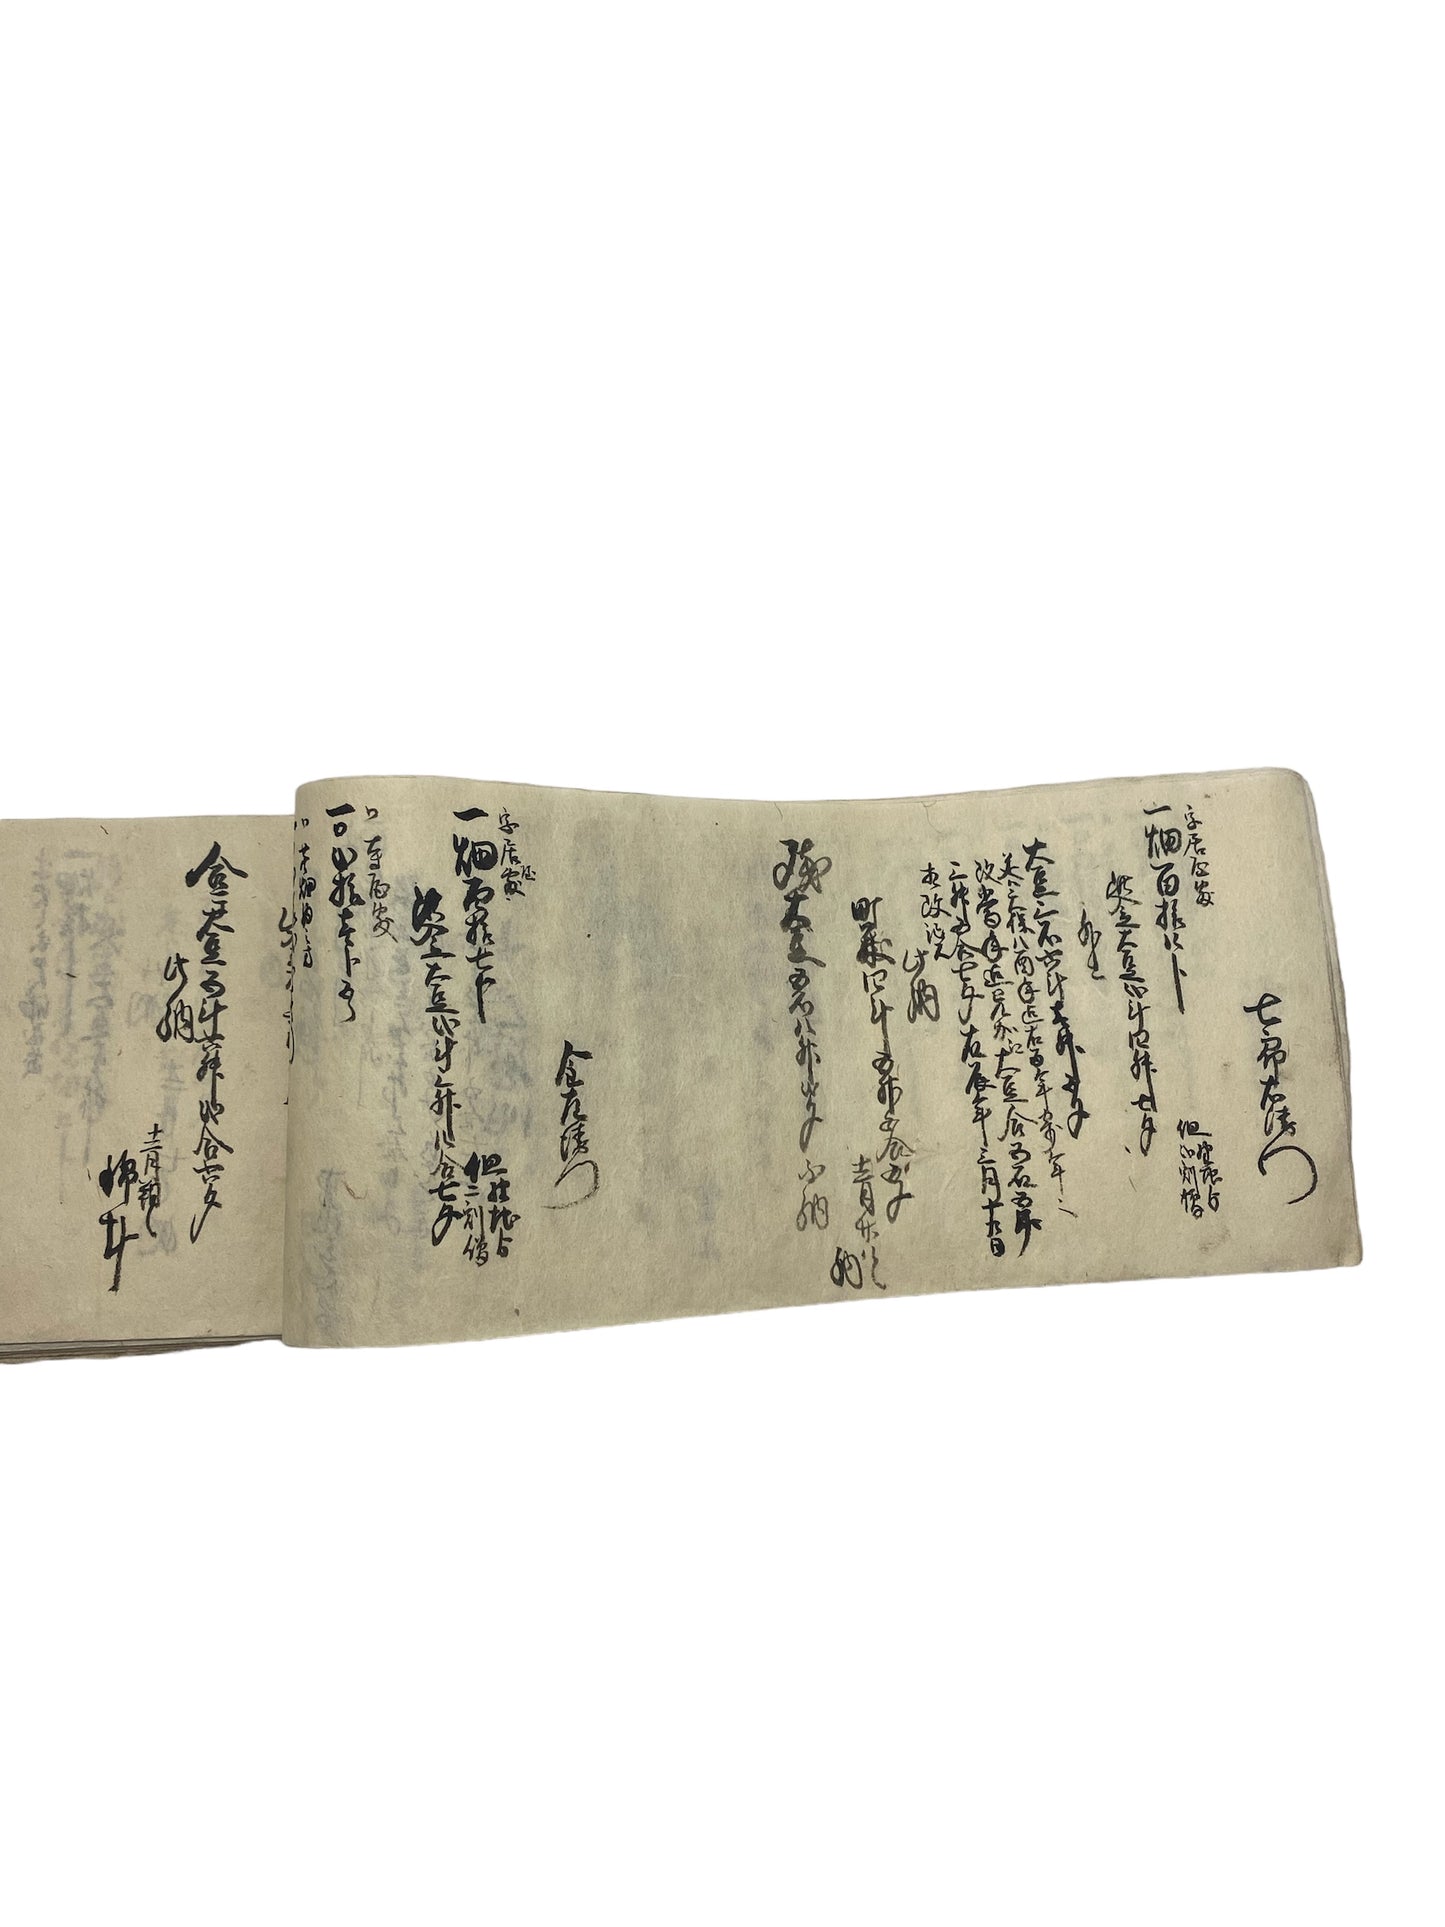 Handwritten merchant shop ledgers from the Edo period 1856